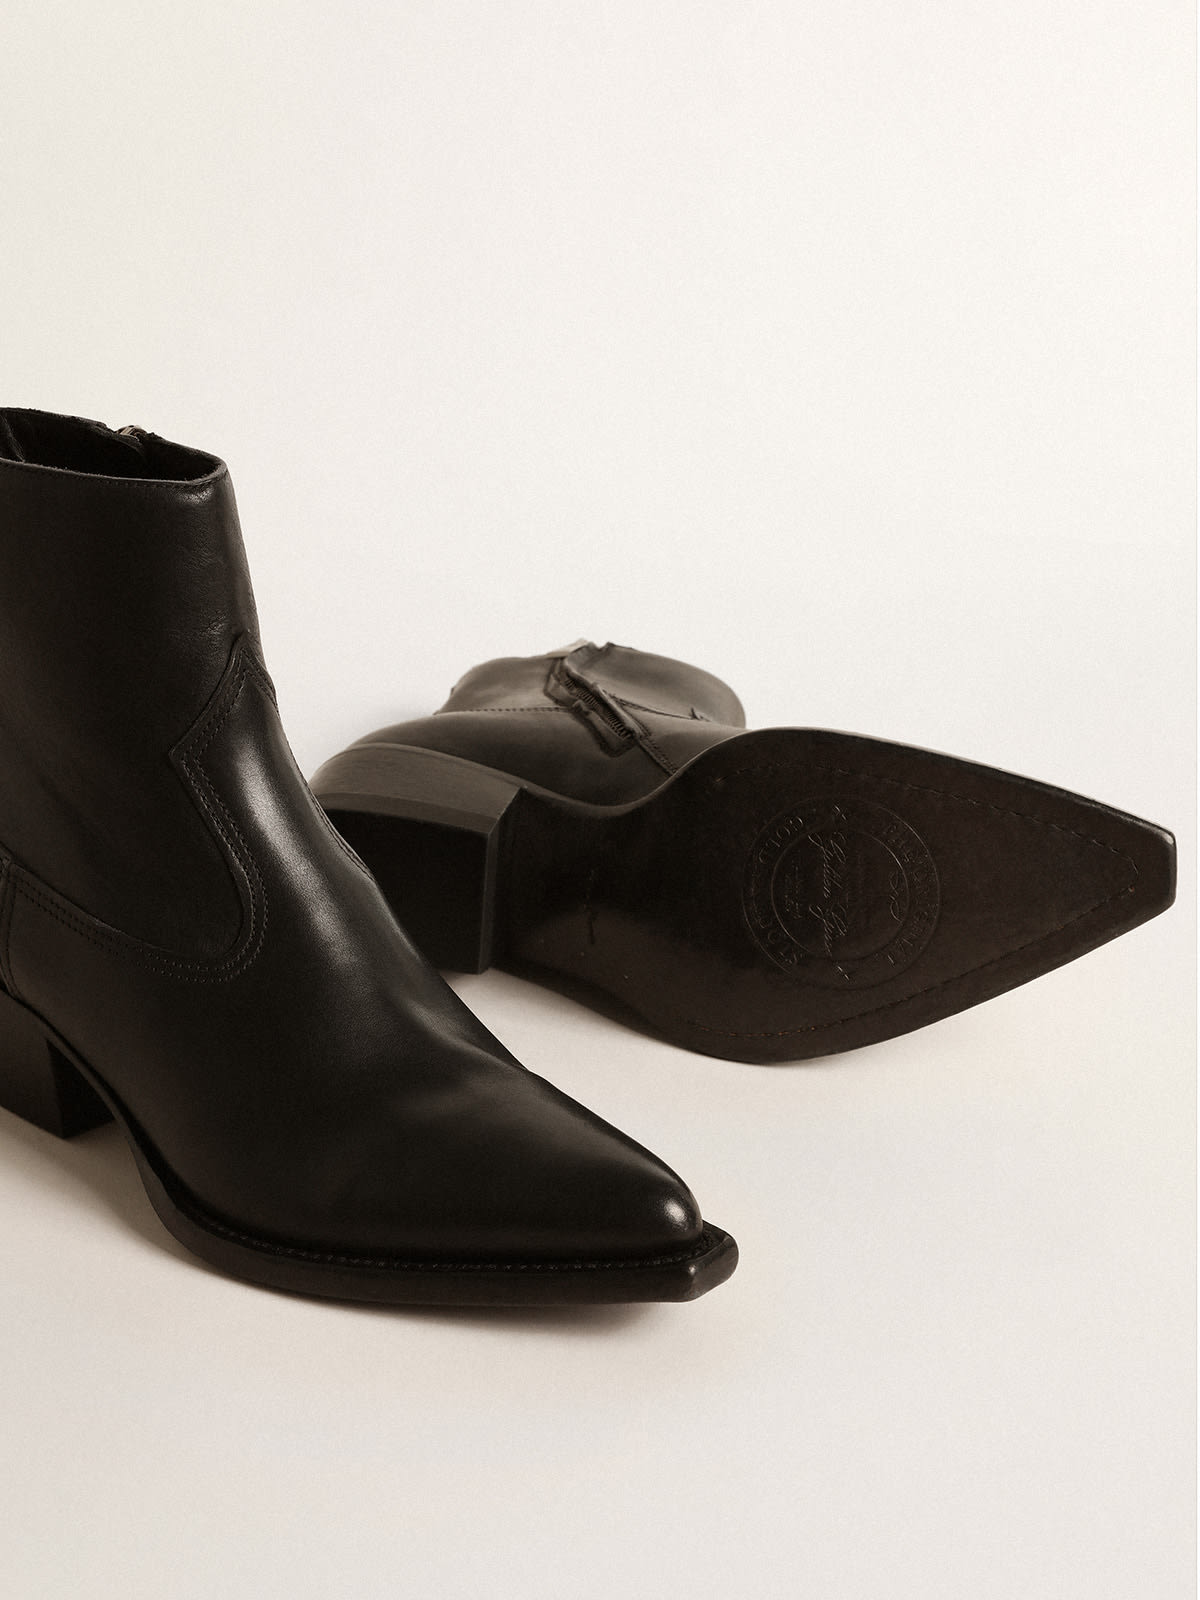 Golden Goose - Women’s Debbie boots in black leather in 